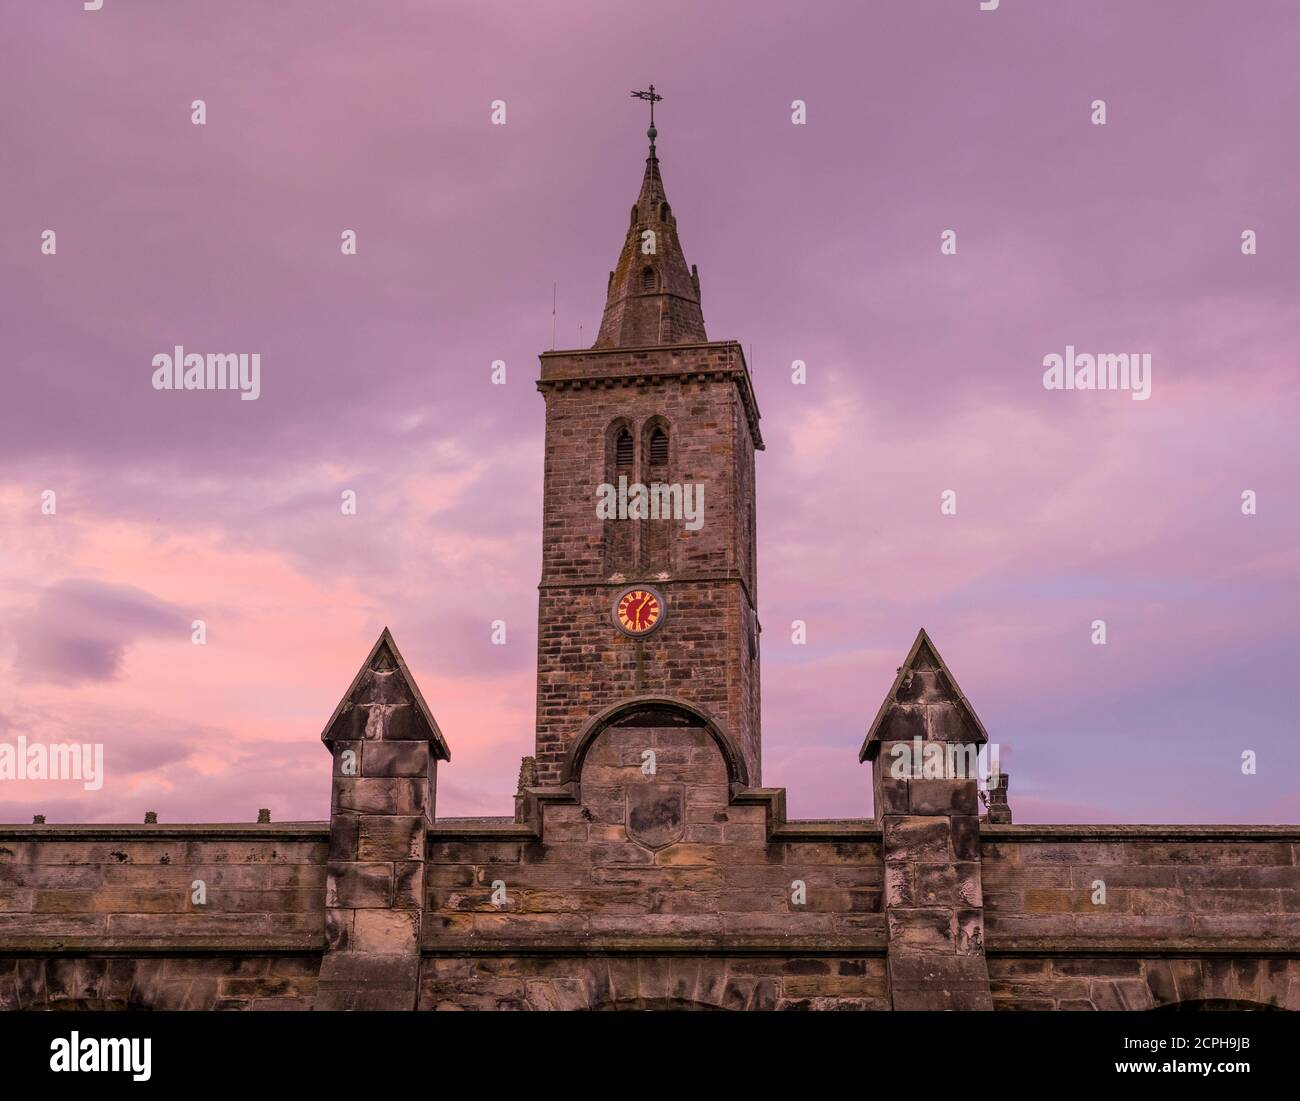 Nachtstunden St Salvators Chapel Spire, St Salvators Chapel, University of St Andrews, St Andrews, Fife, Schottland, Großbritannien, GB. Stockfoto